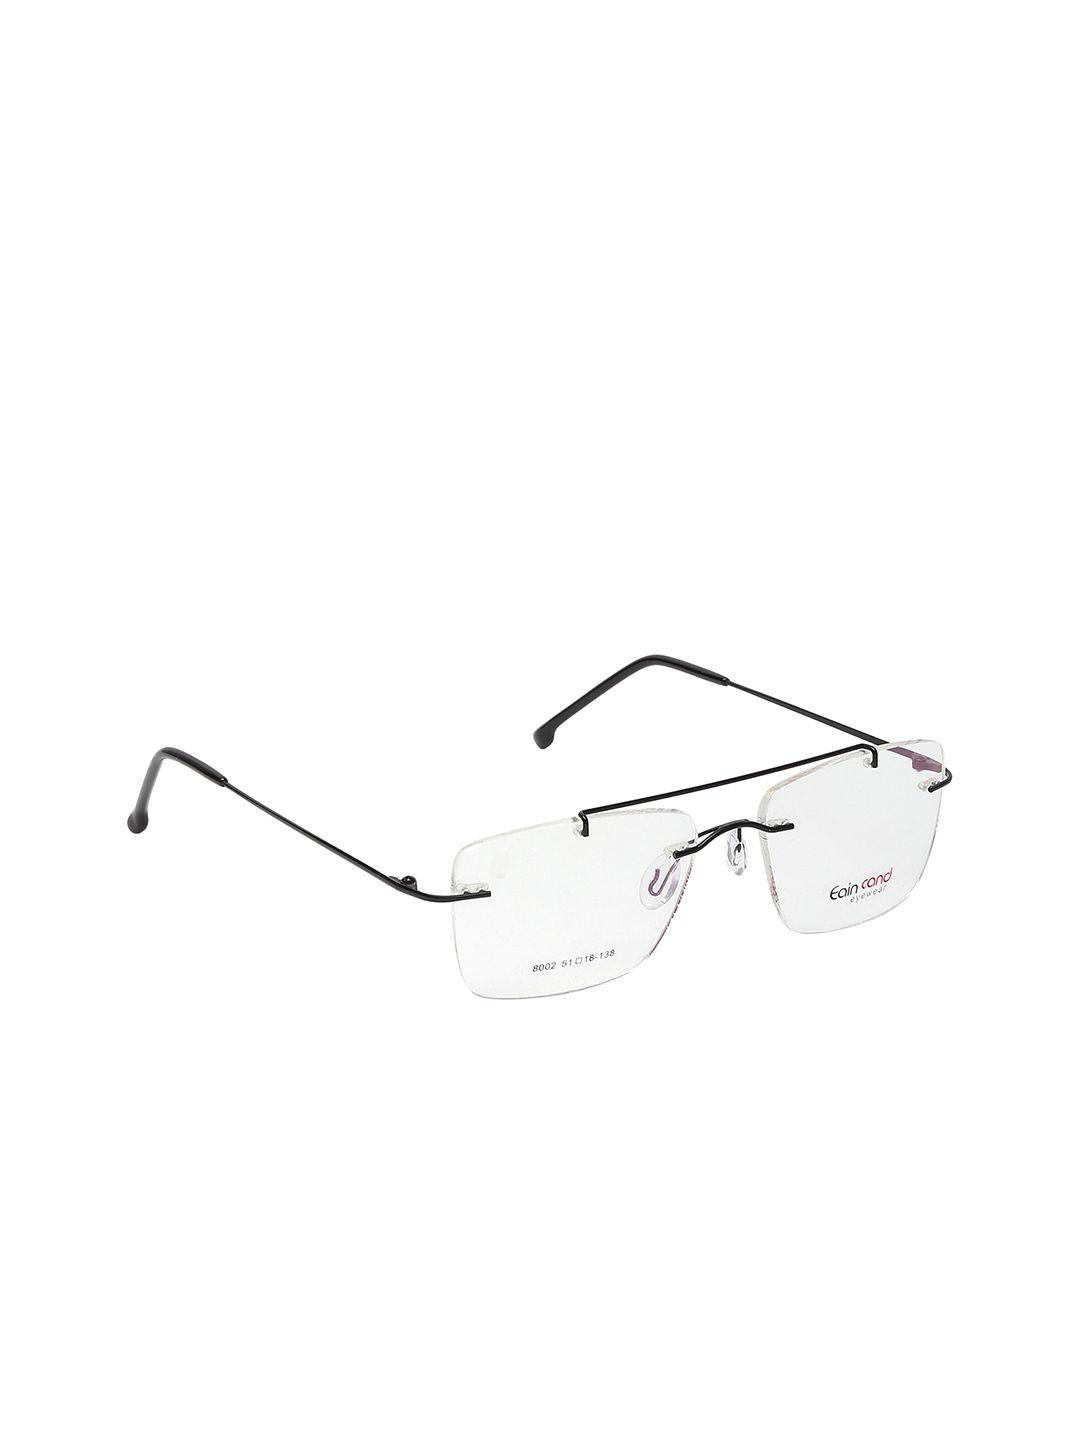 scaglia unisex clear lens & black wayfarer sunglasses with uv protected lens - clr_sqr_scg